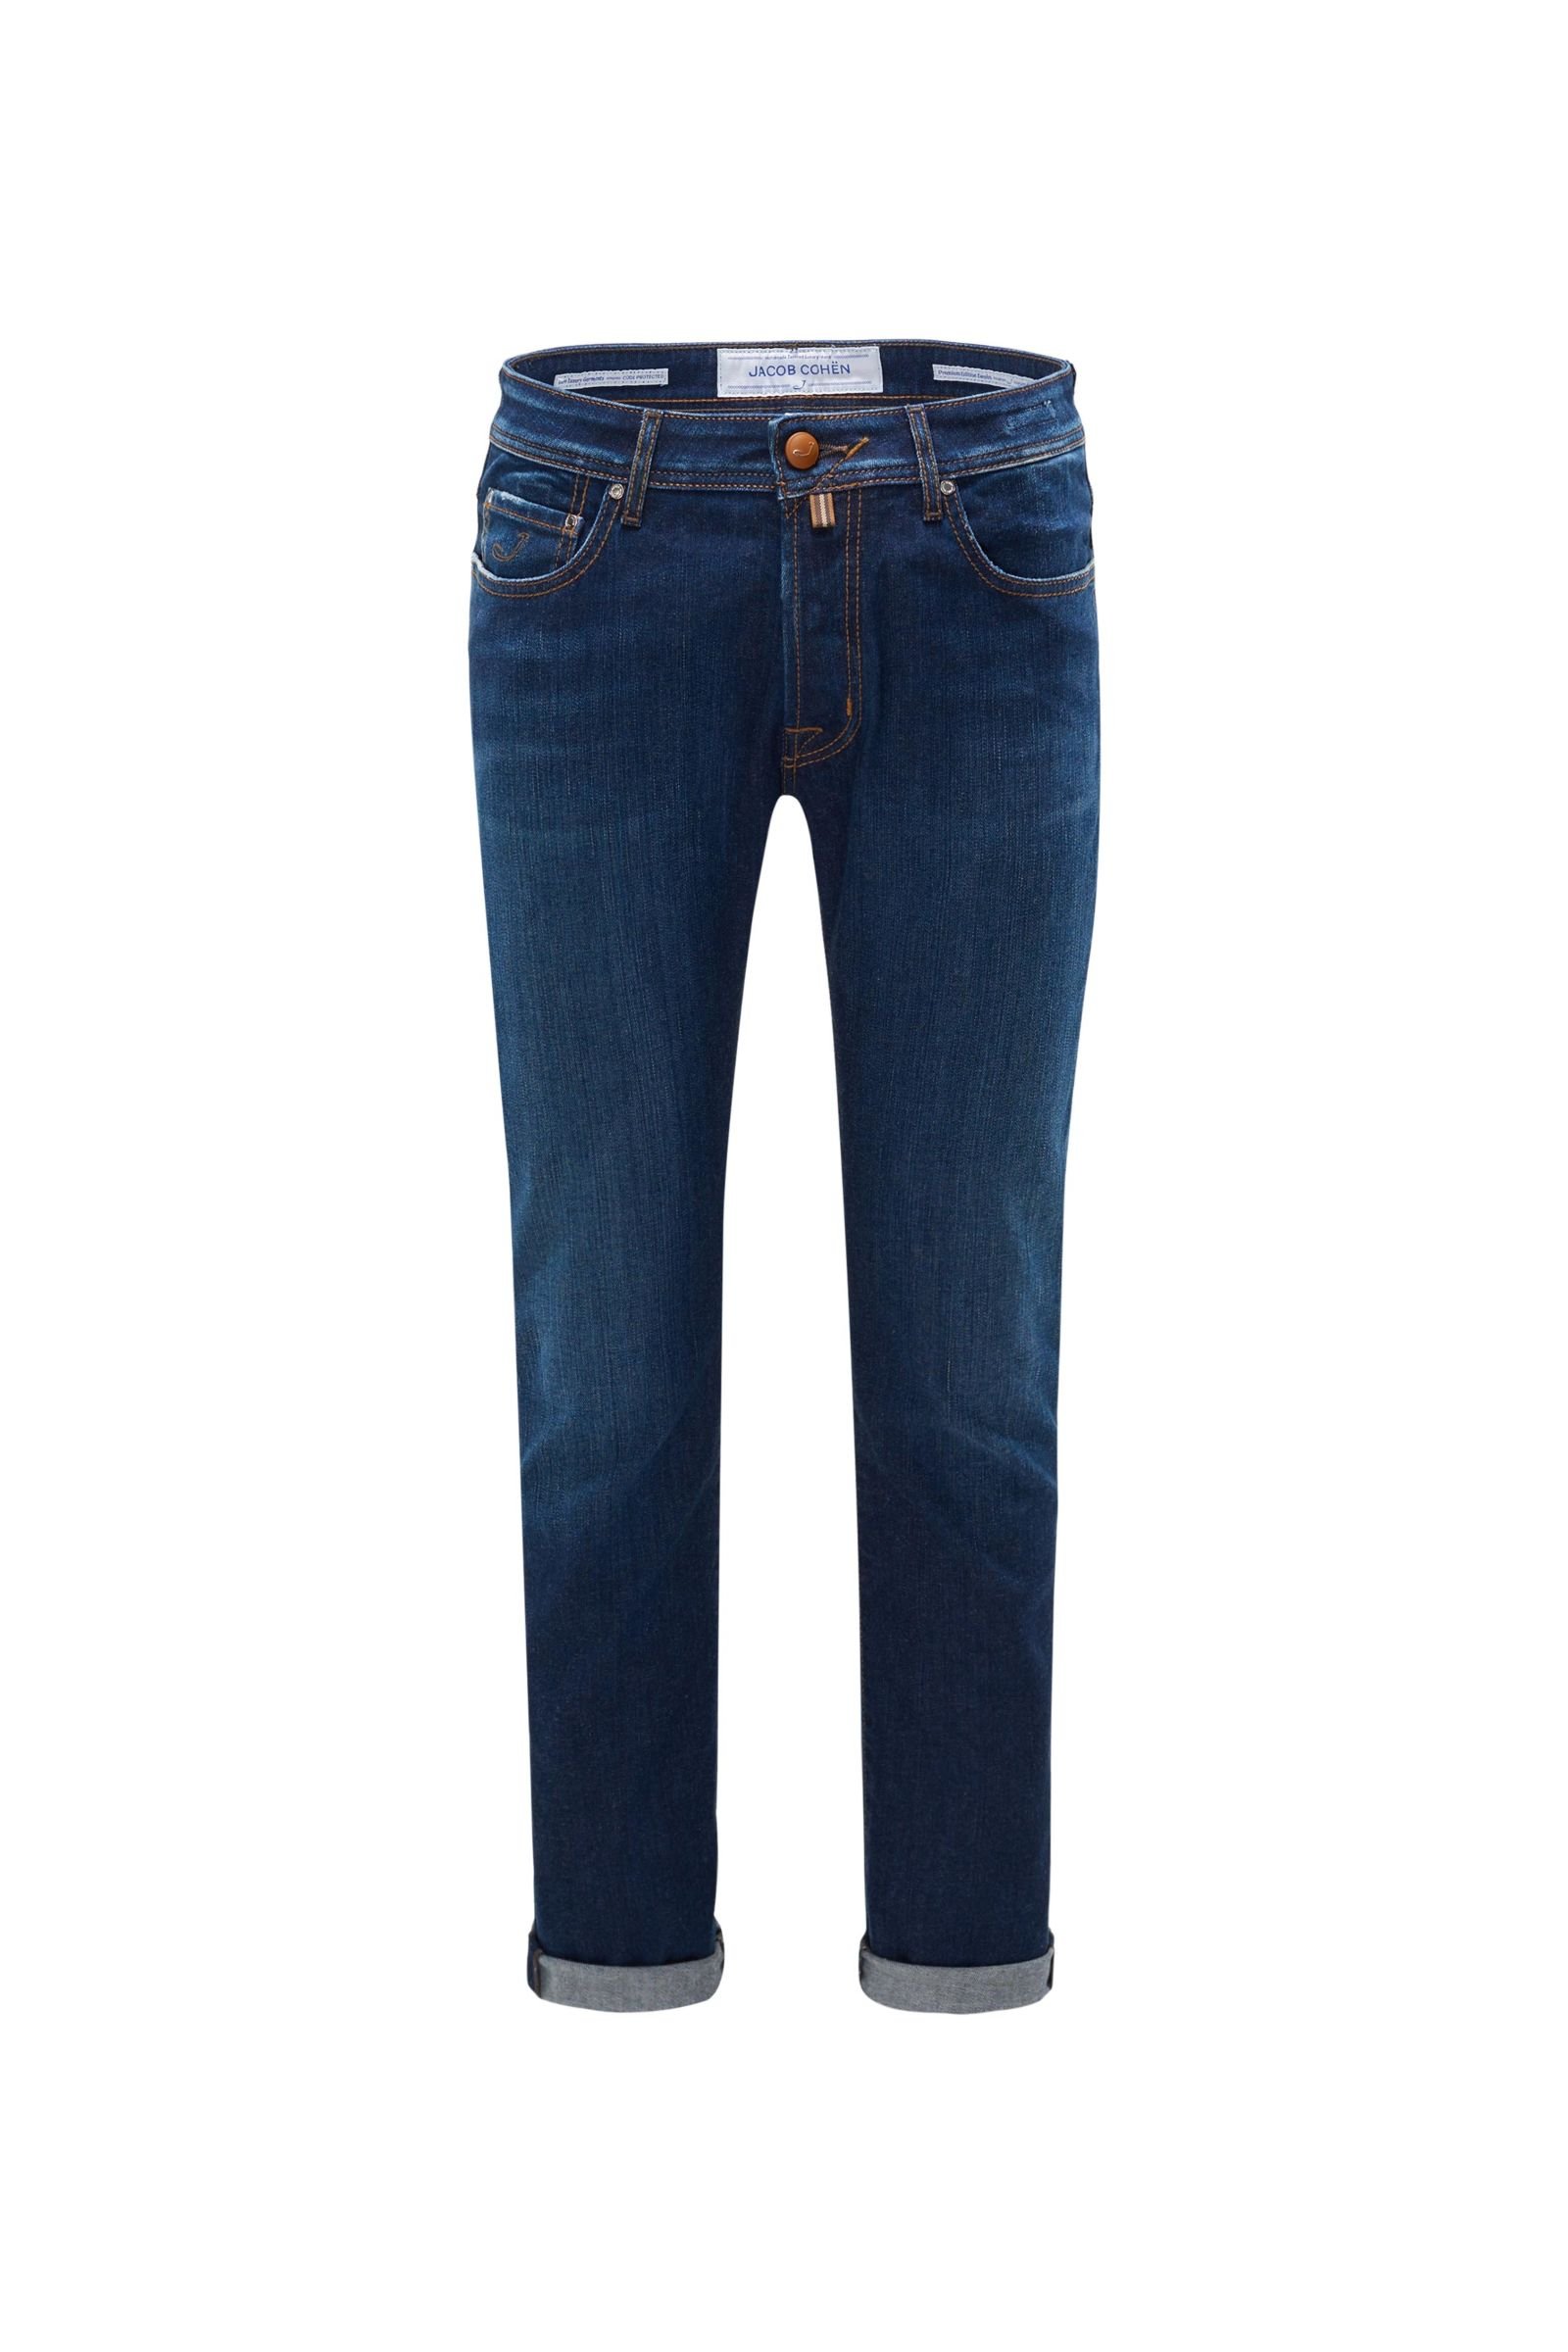 Jeans 'J688 Comfort Slim Fit' dunkelblau